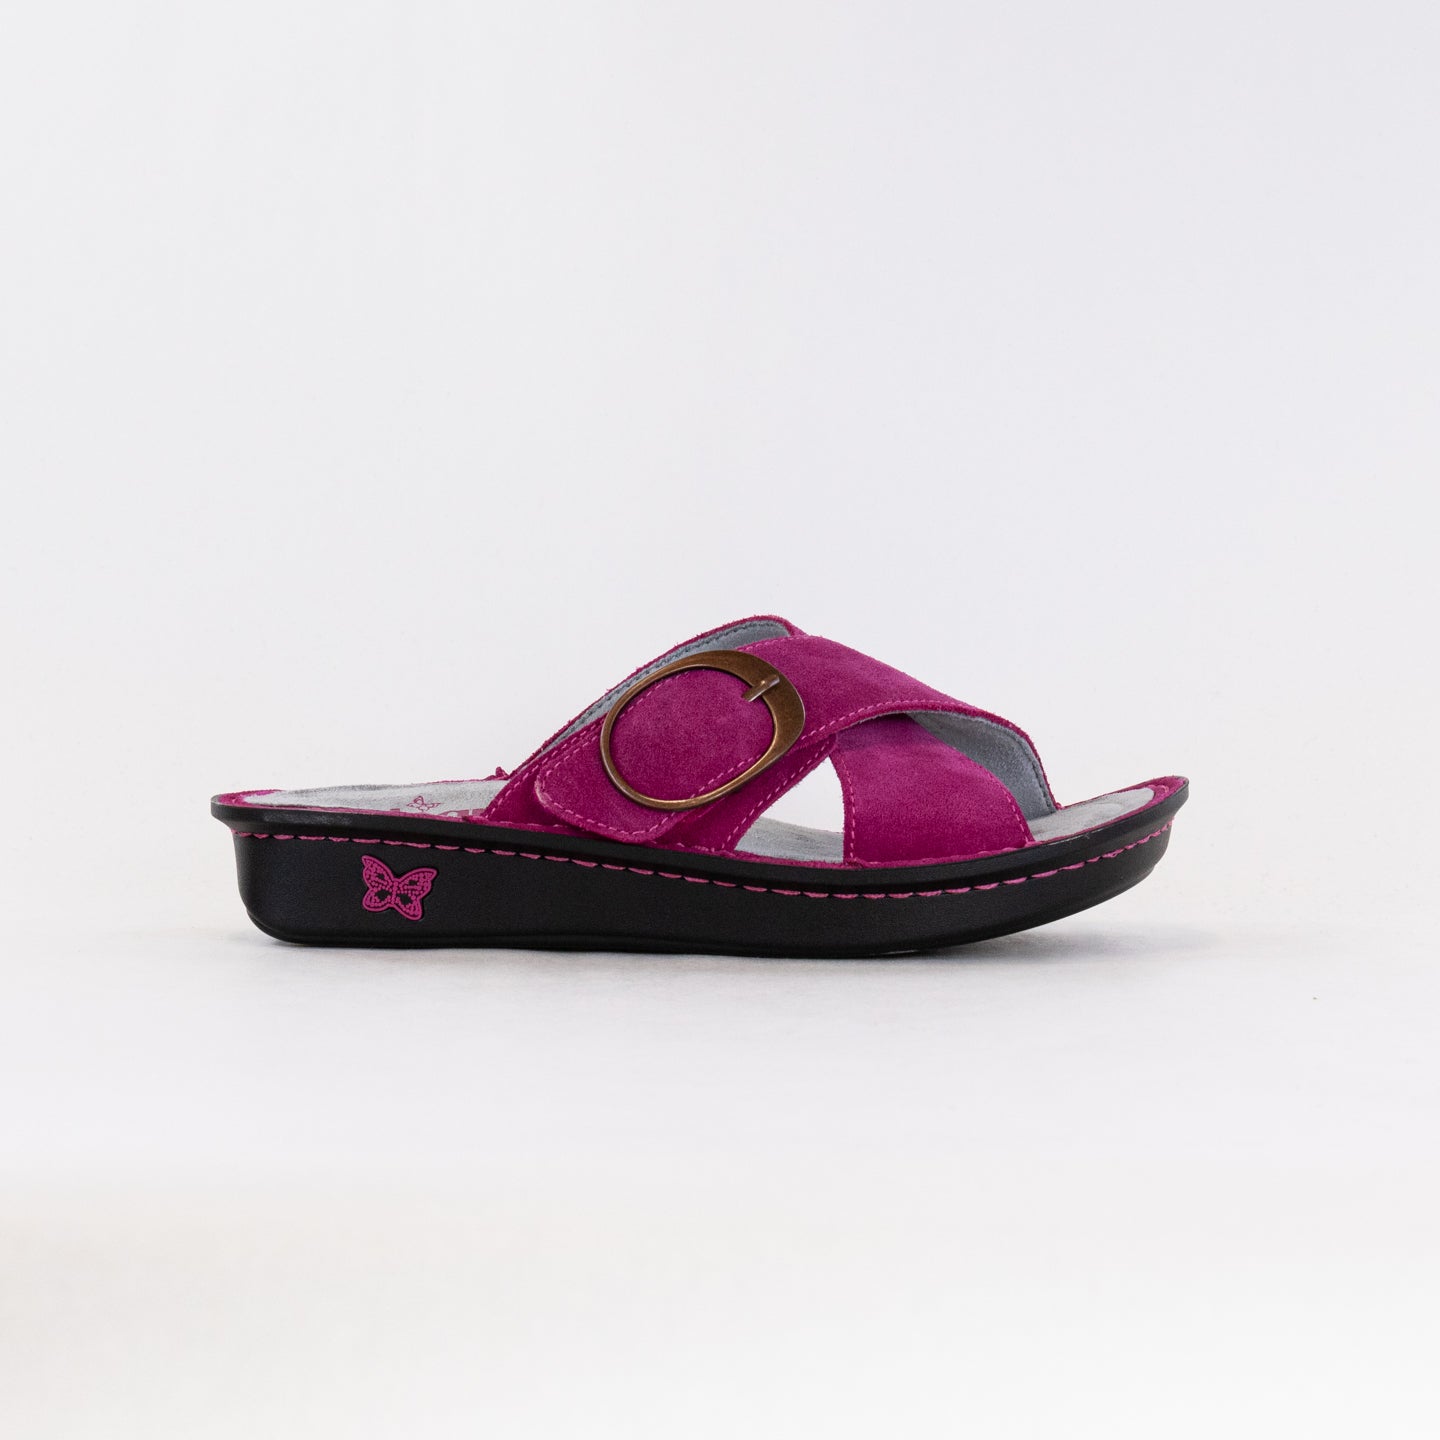 Alegria Women's Sandal Collection